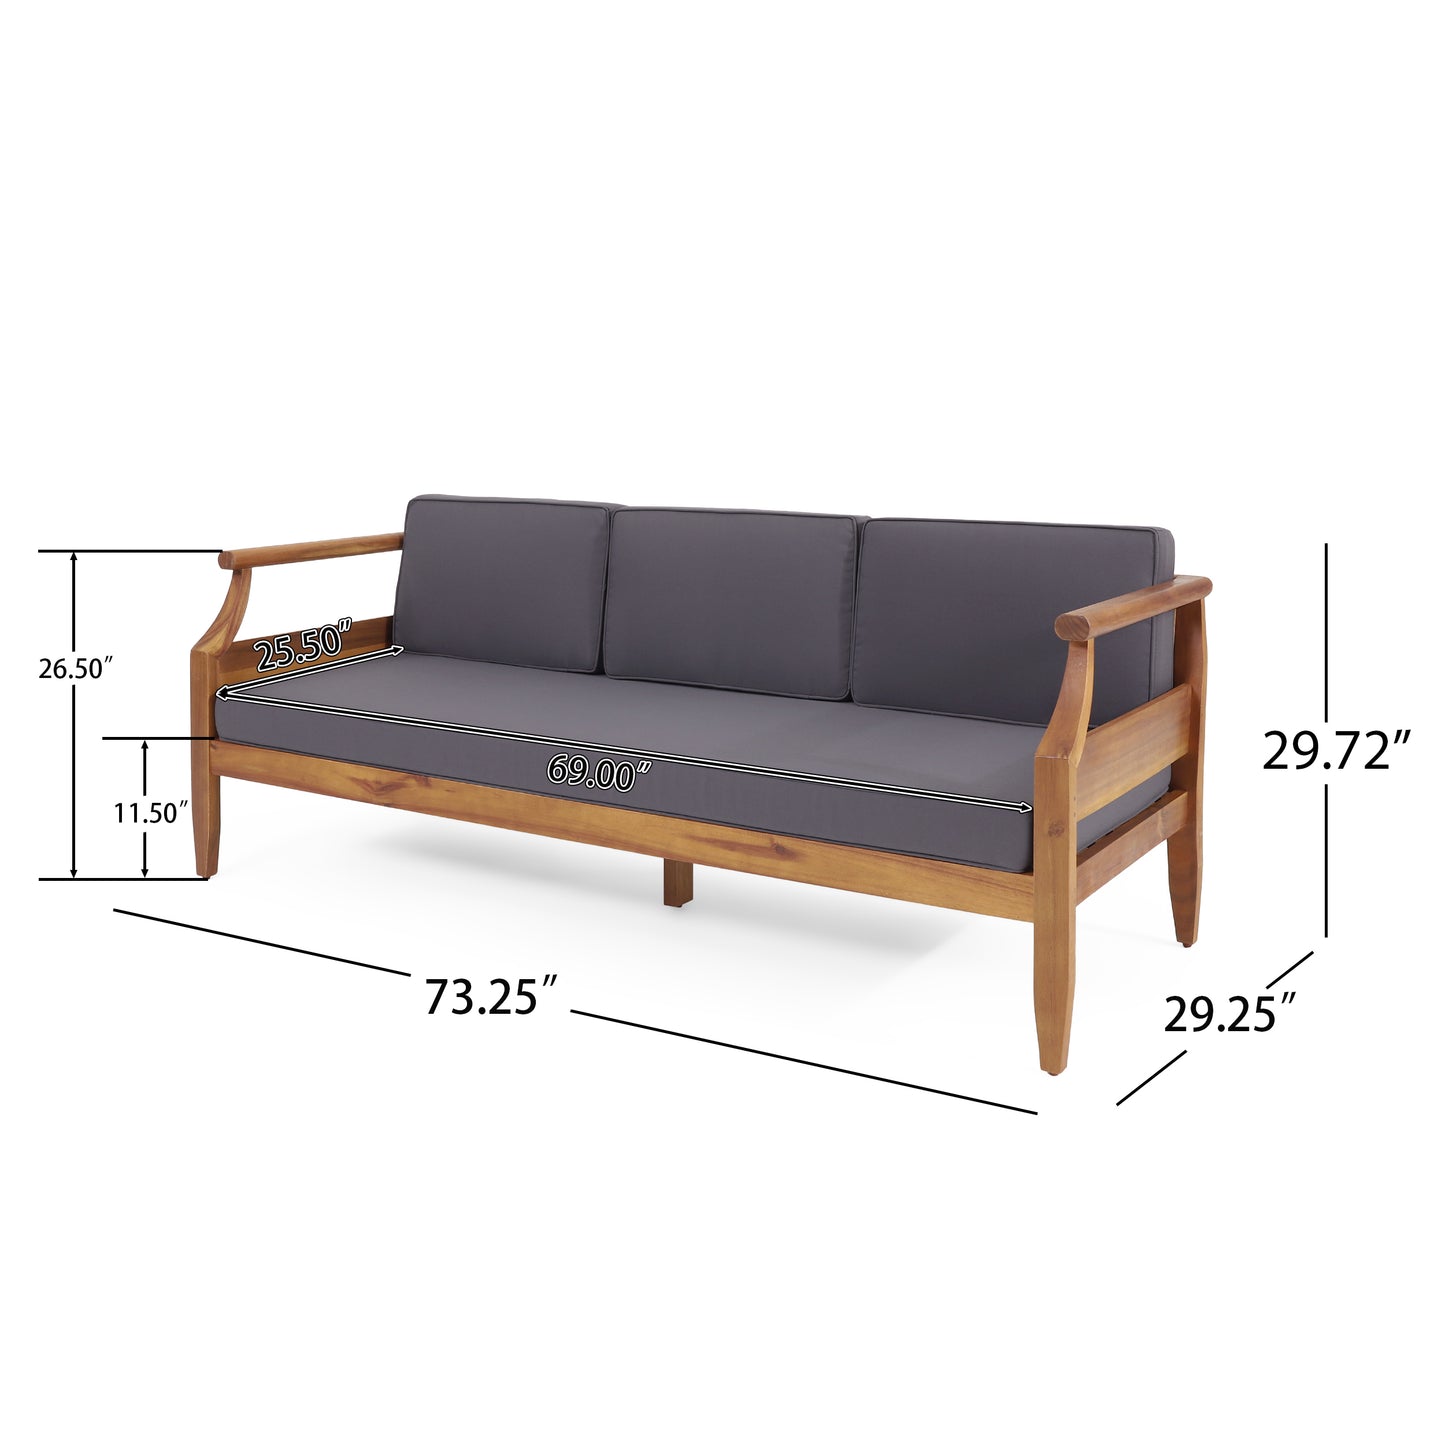 Bianca Outdoor Mid-Century Modern Acacia Wood 3 Seater Sofa, Teak and Dark Gray